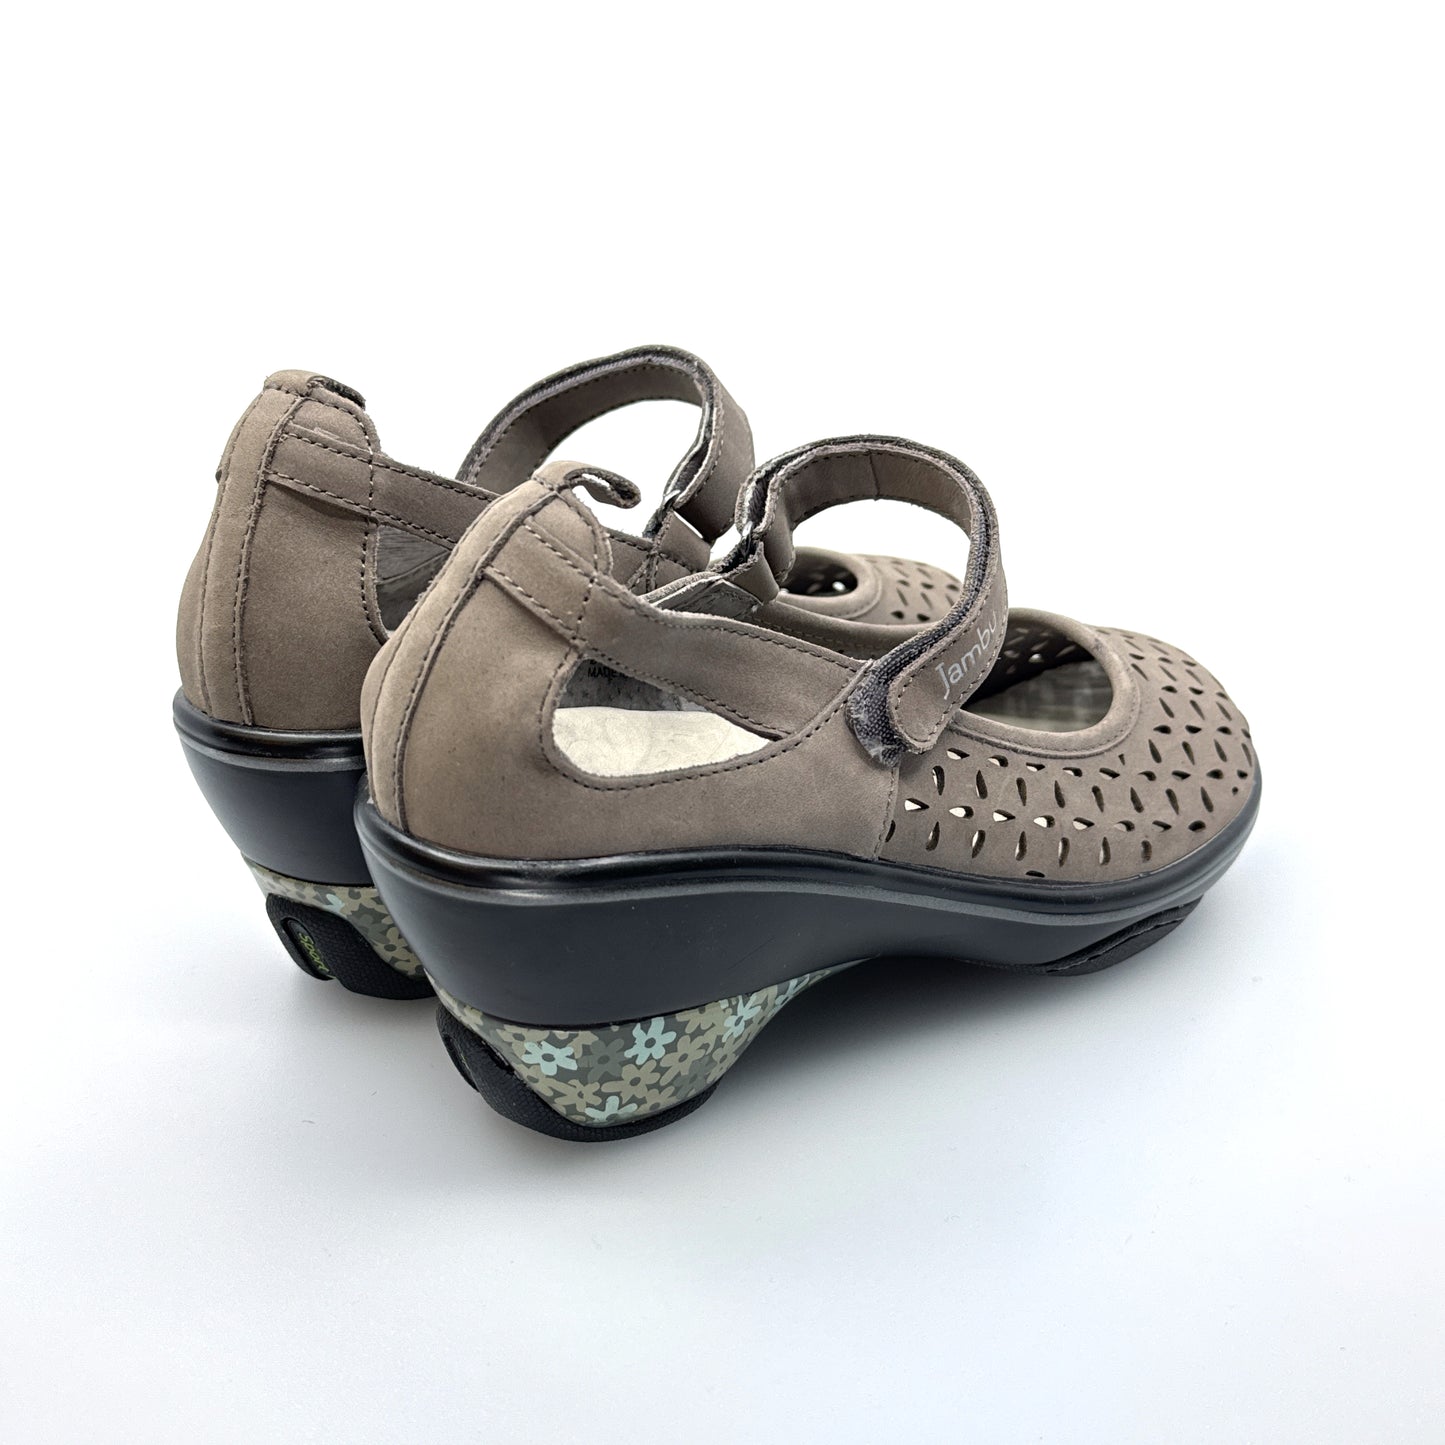 Jambu | Calypso Mary Jane Wedge Shoe | Color: Light Taupe | Size: 6.5M | NEW